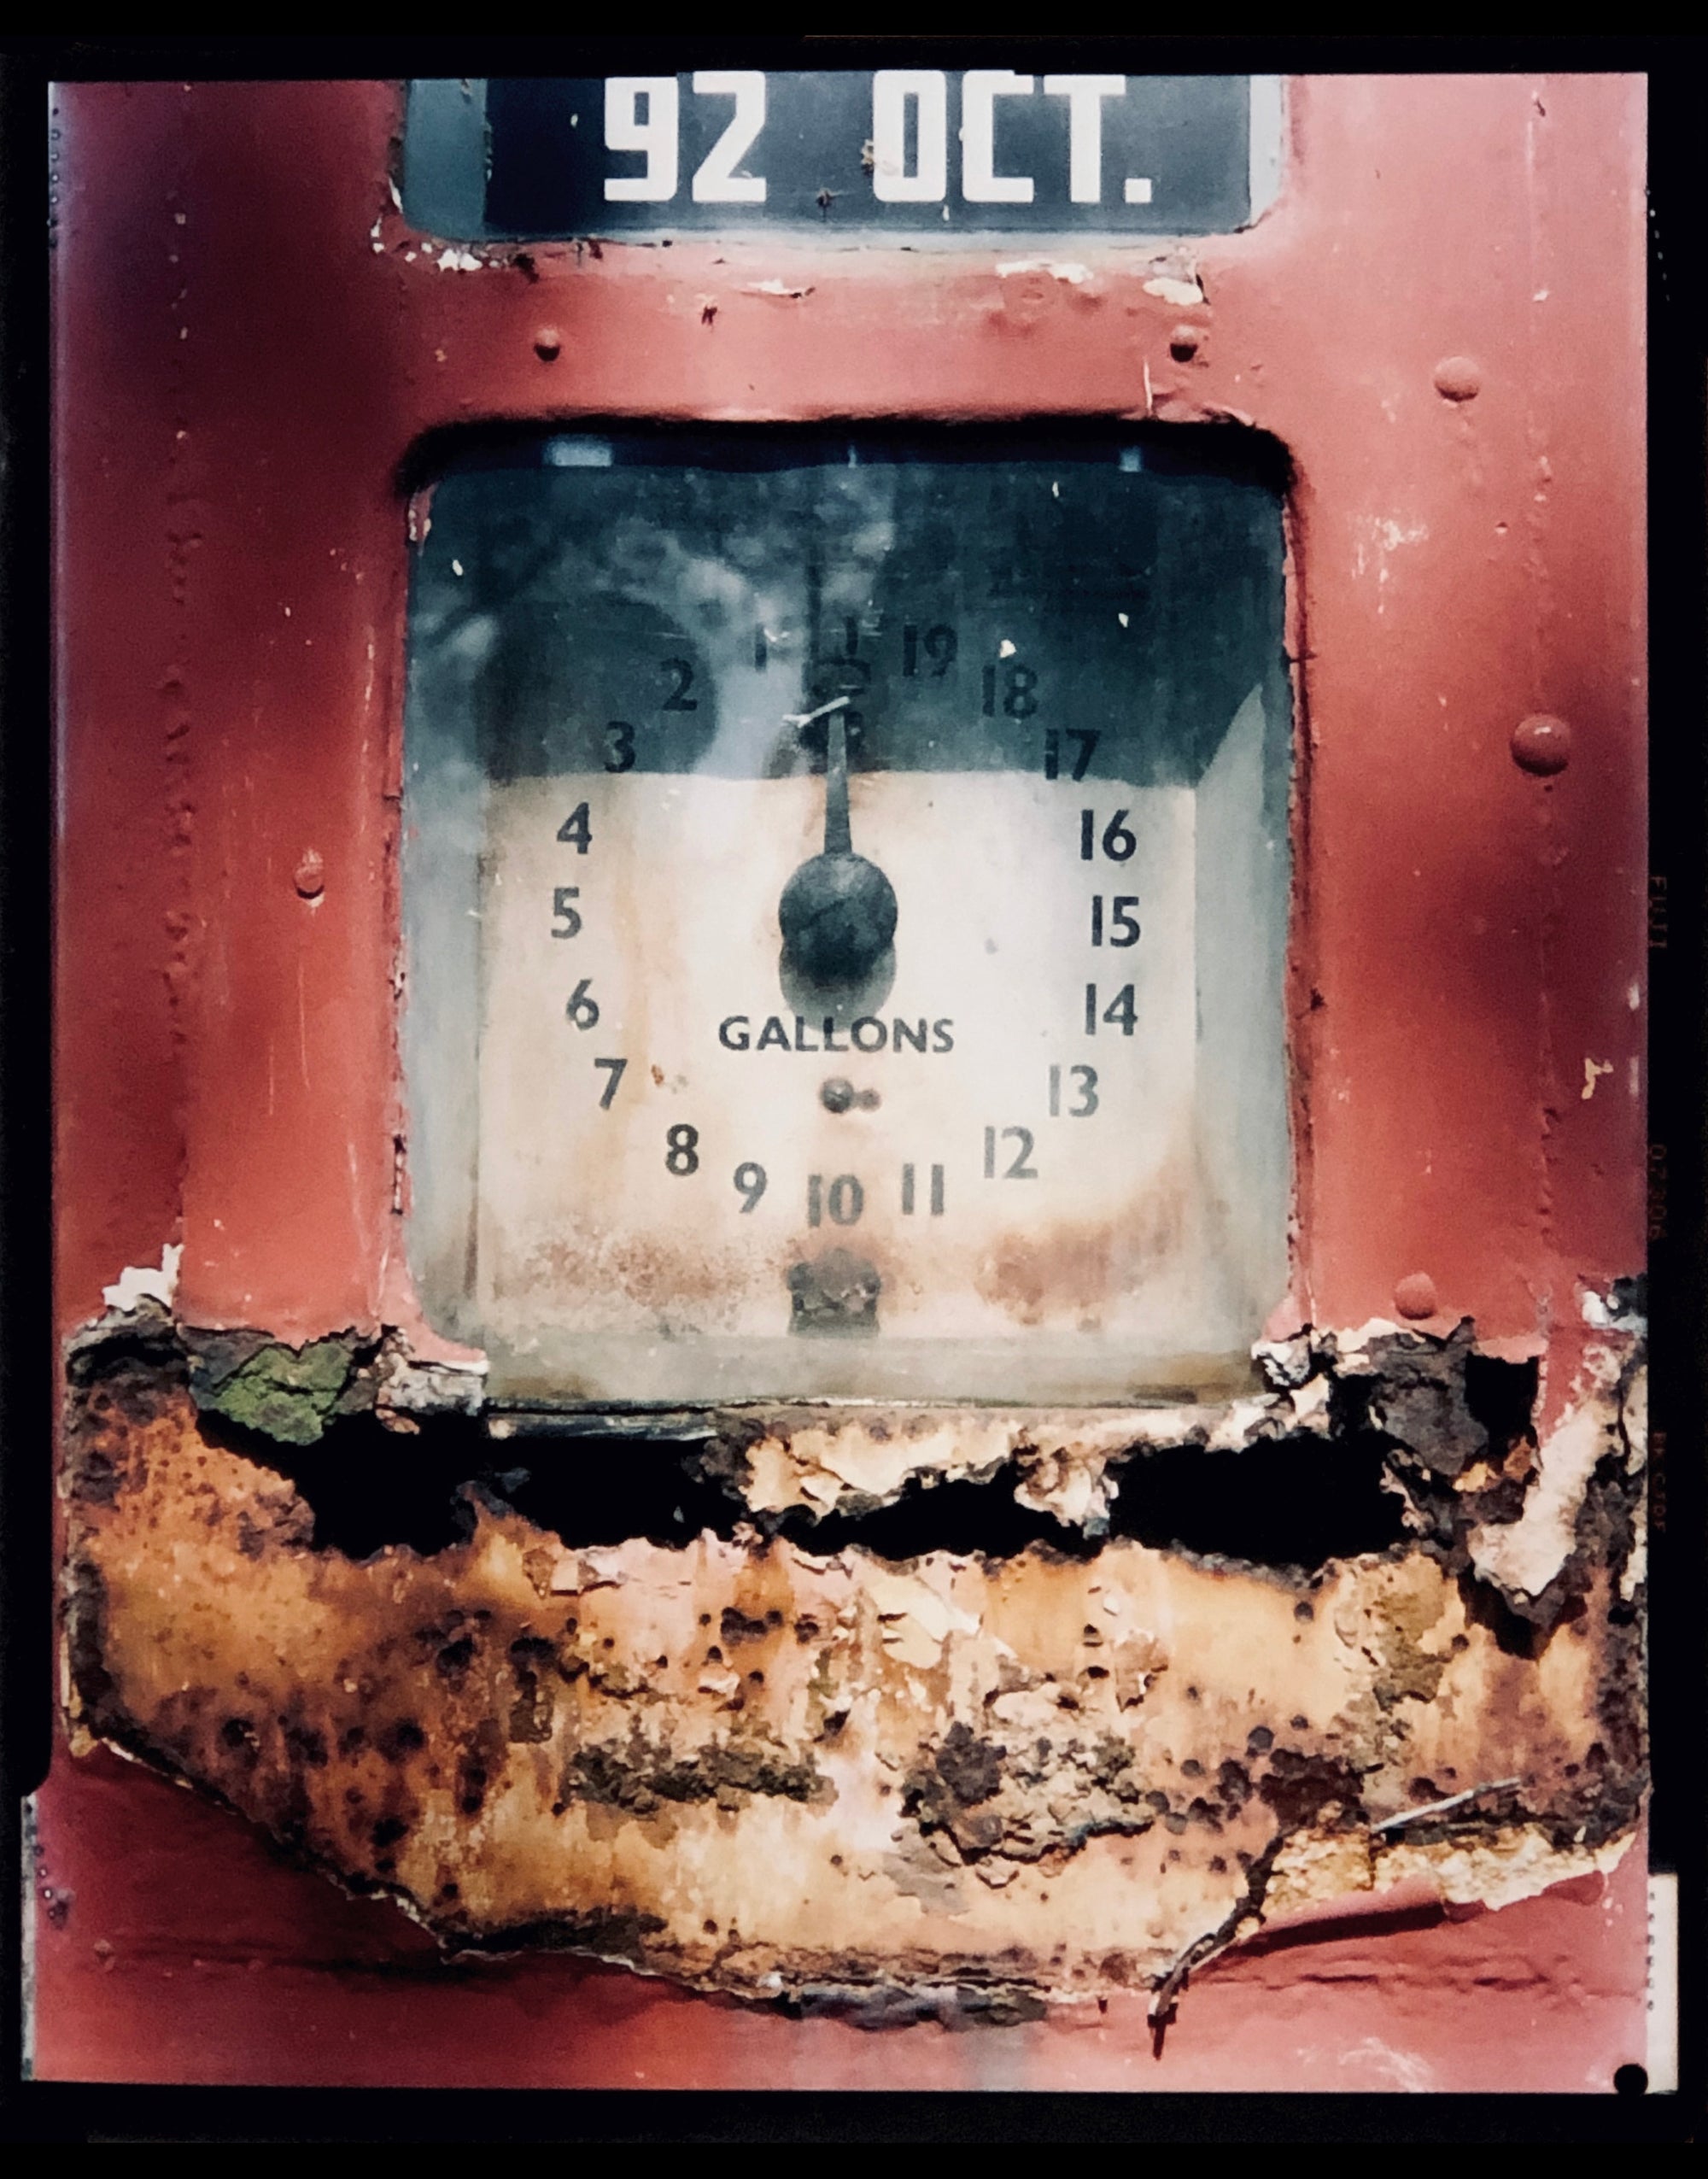 92 Octane Petrol Pump, Wimblington,1993